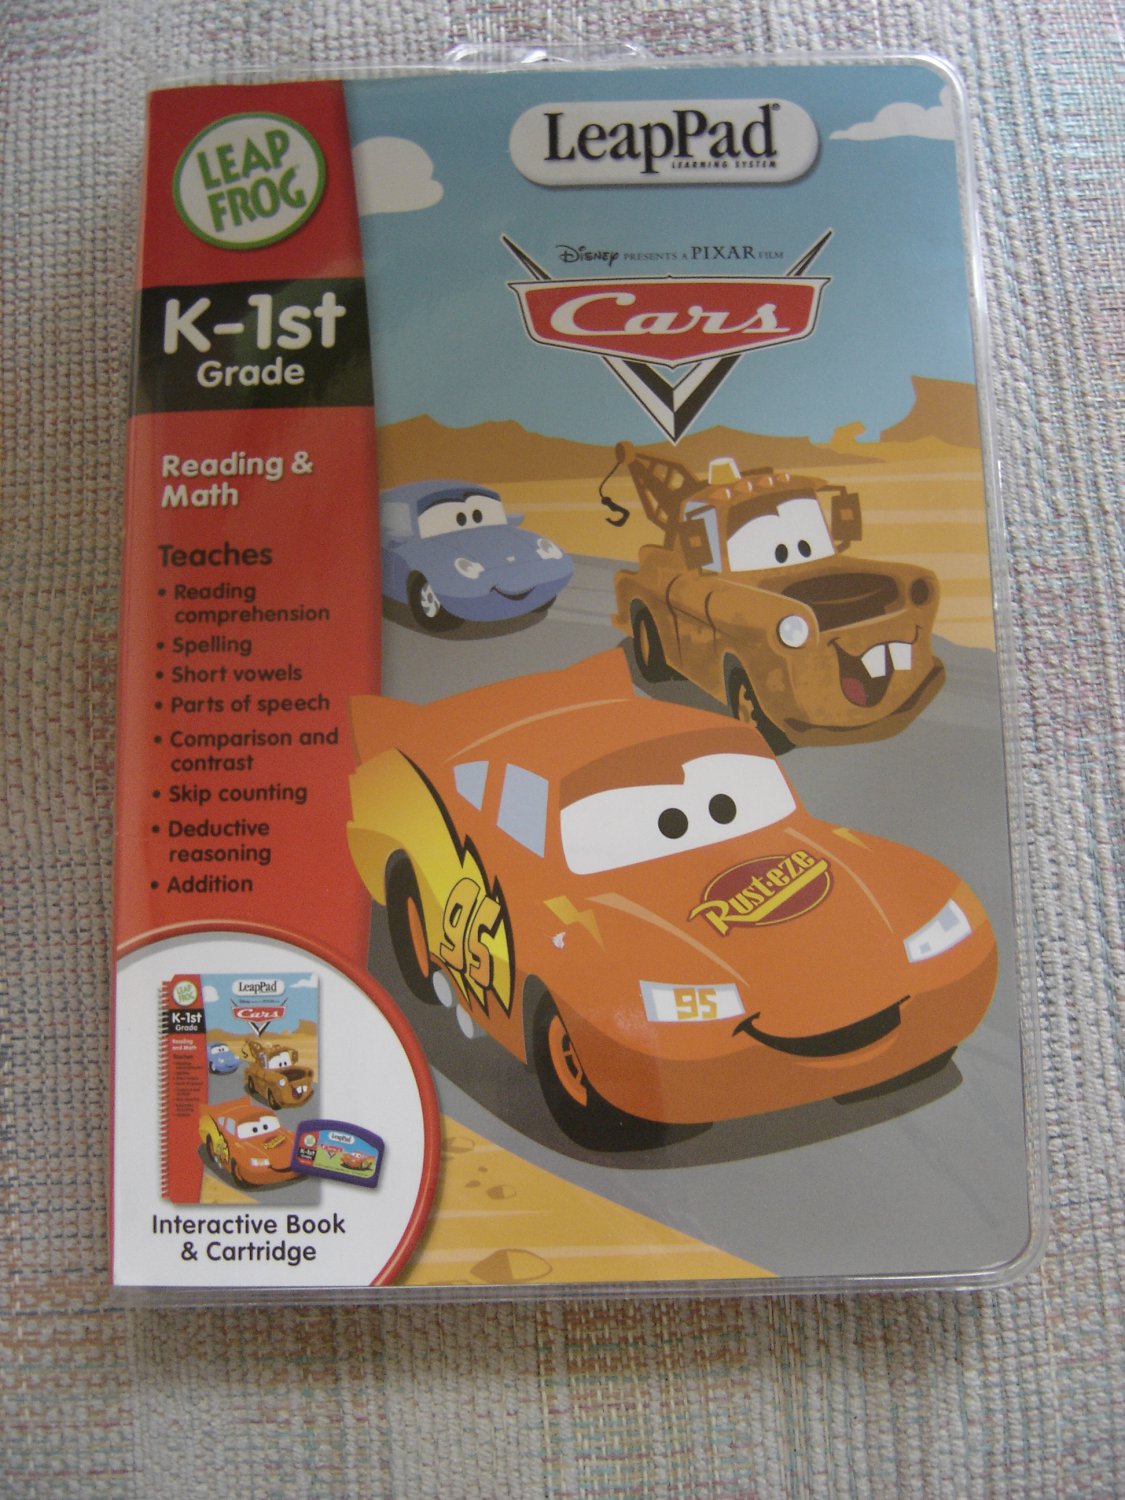 Leap Frog LeapPad Disney Pixar Cars K-1st Grade Book and Cartridge - BRAND NEW!